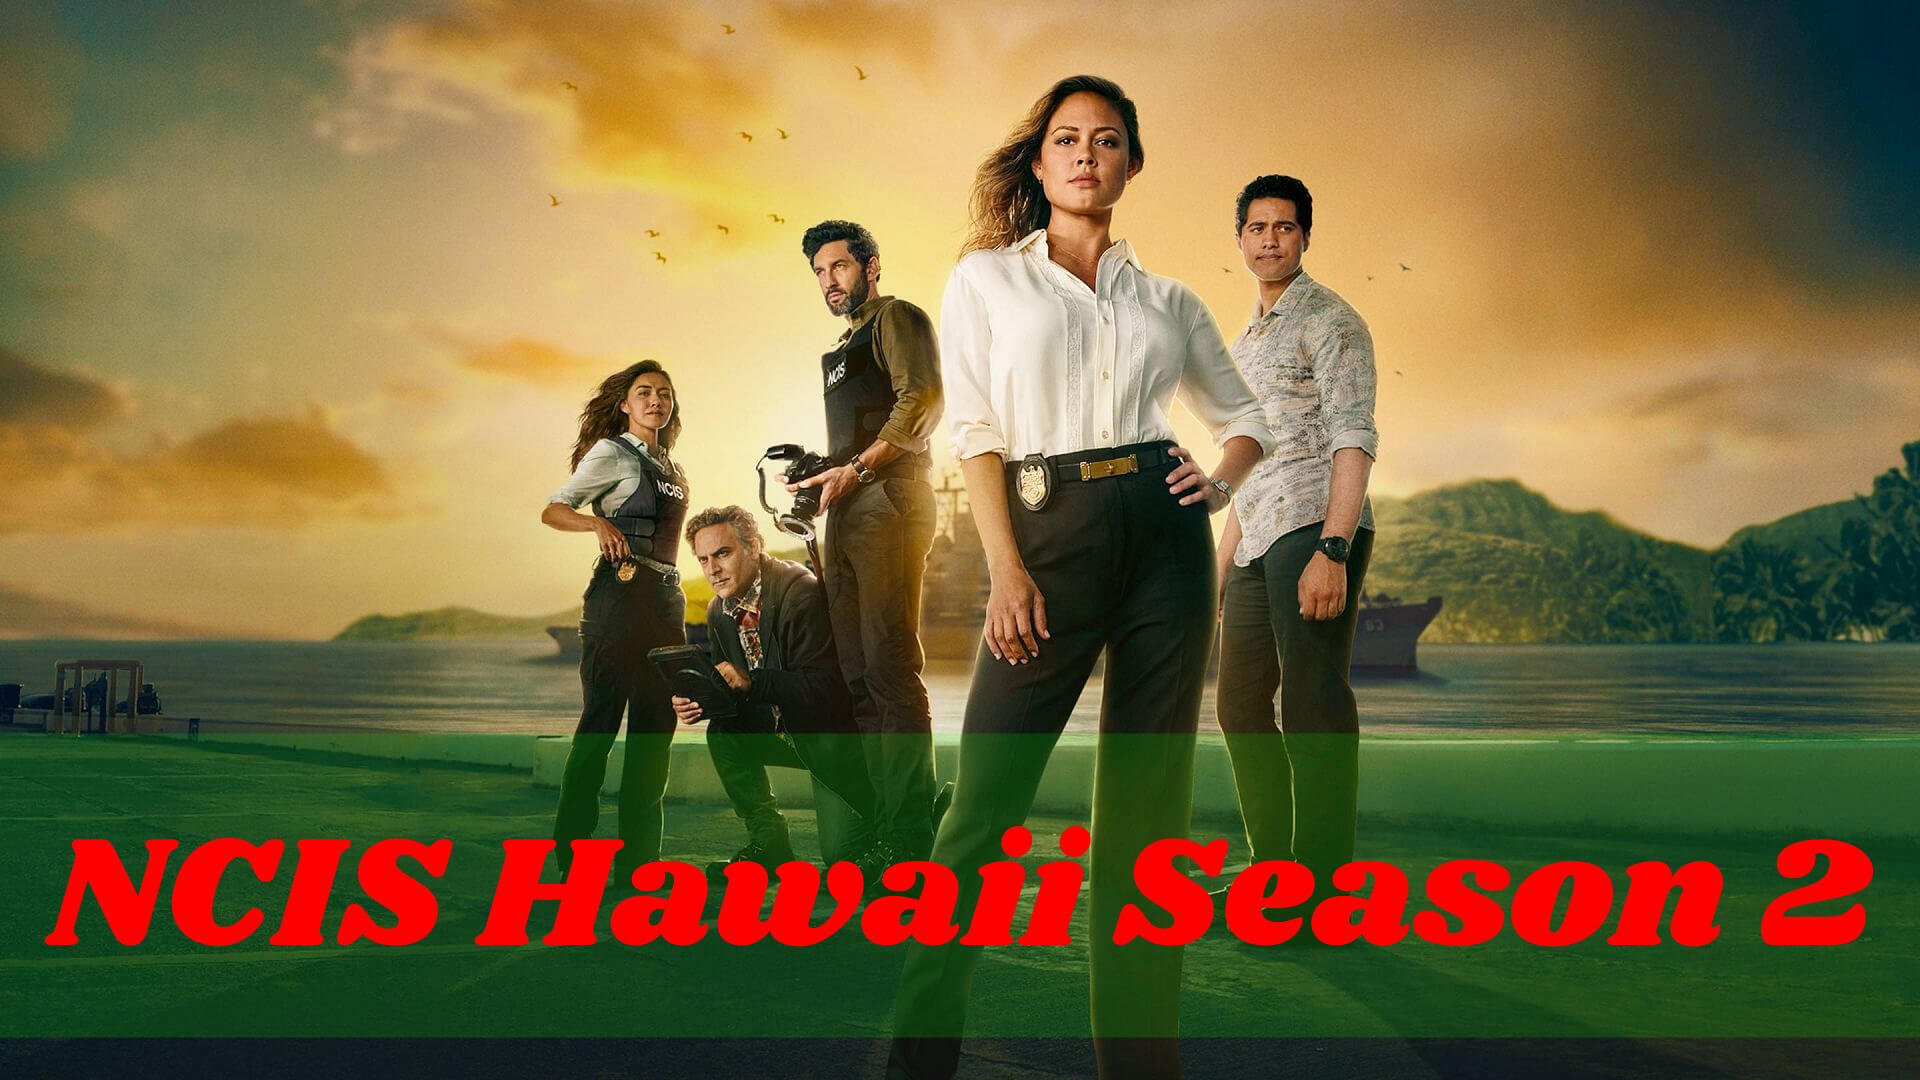 NCIS Hawaii Season 2 Release Date, Cast, Plot All We Know So Far